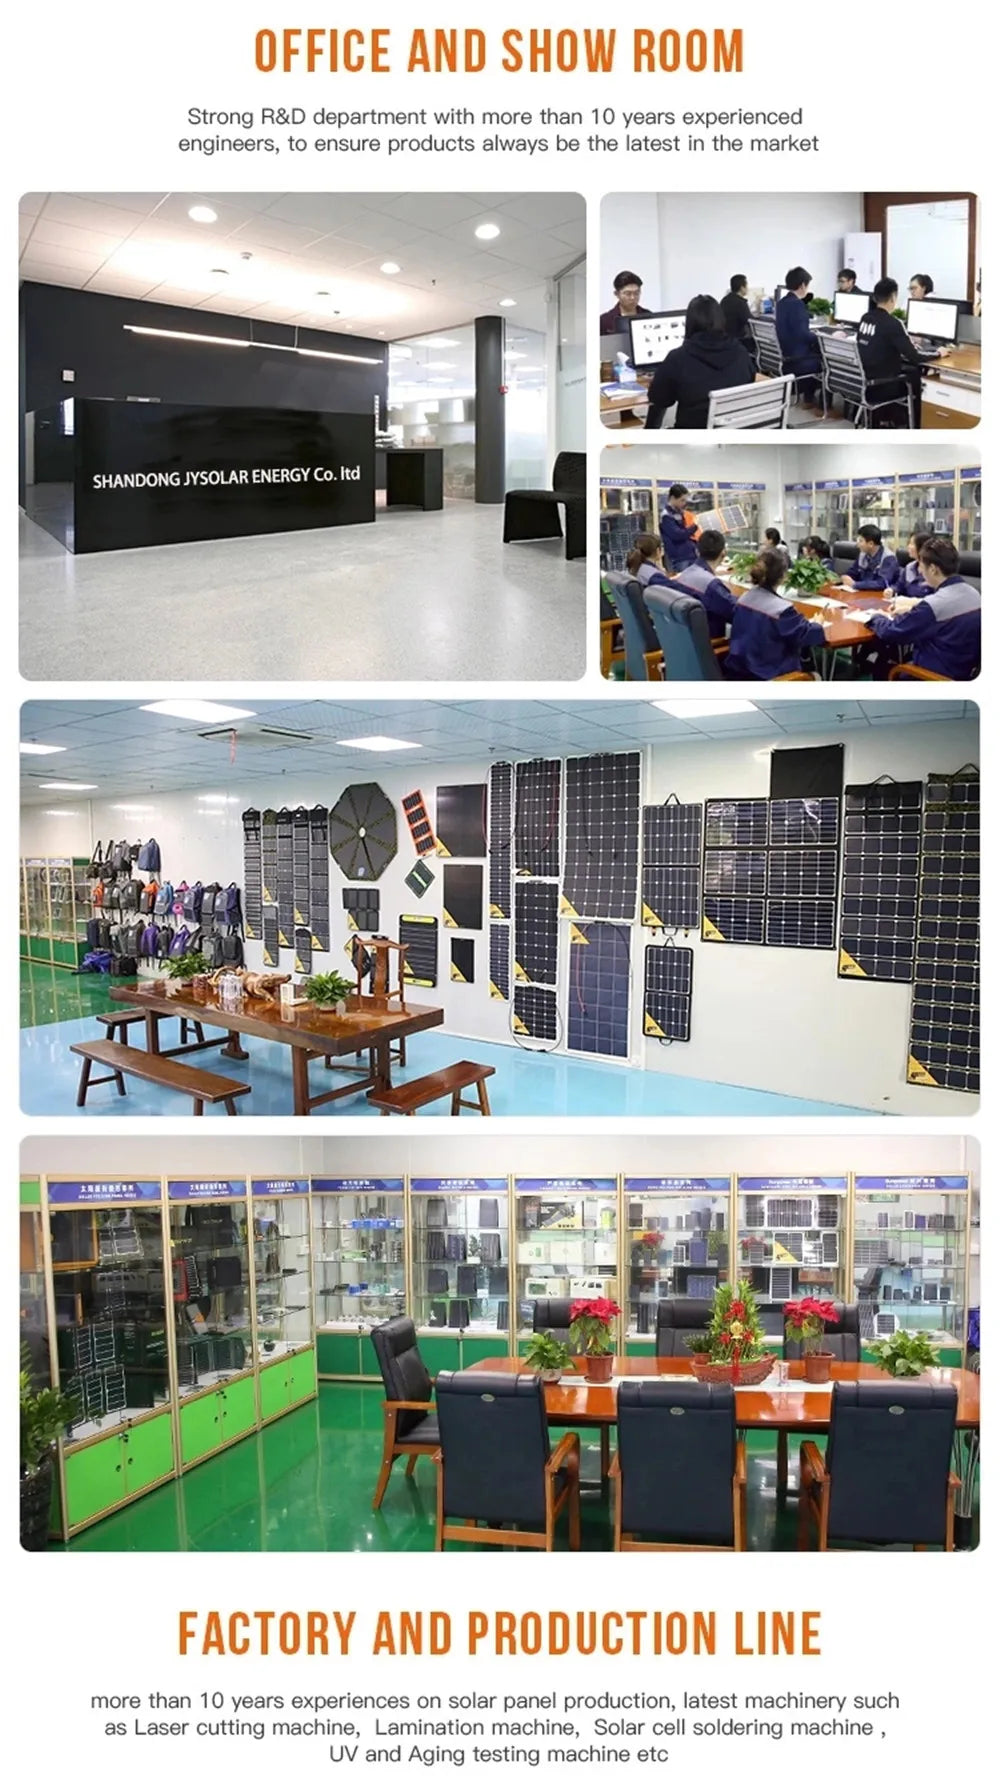 JINGYANG long lasting Semi Flexible solar panel, Shandong Jysolar Energy Co., Ltd.: 10+ years R&D and production expertise, ensuring high-quality solar panels.